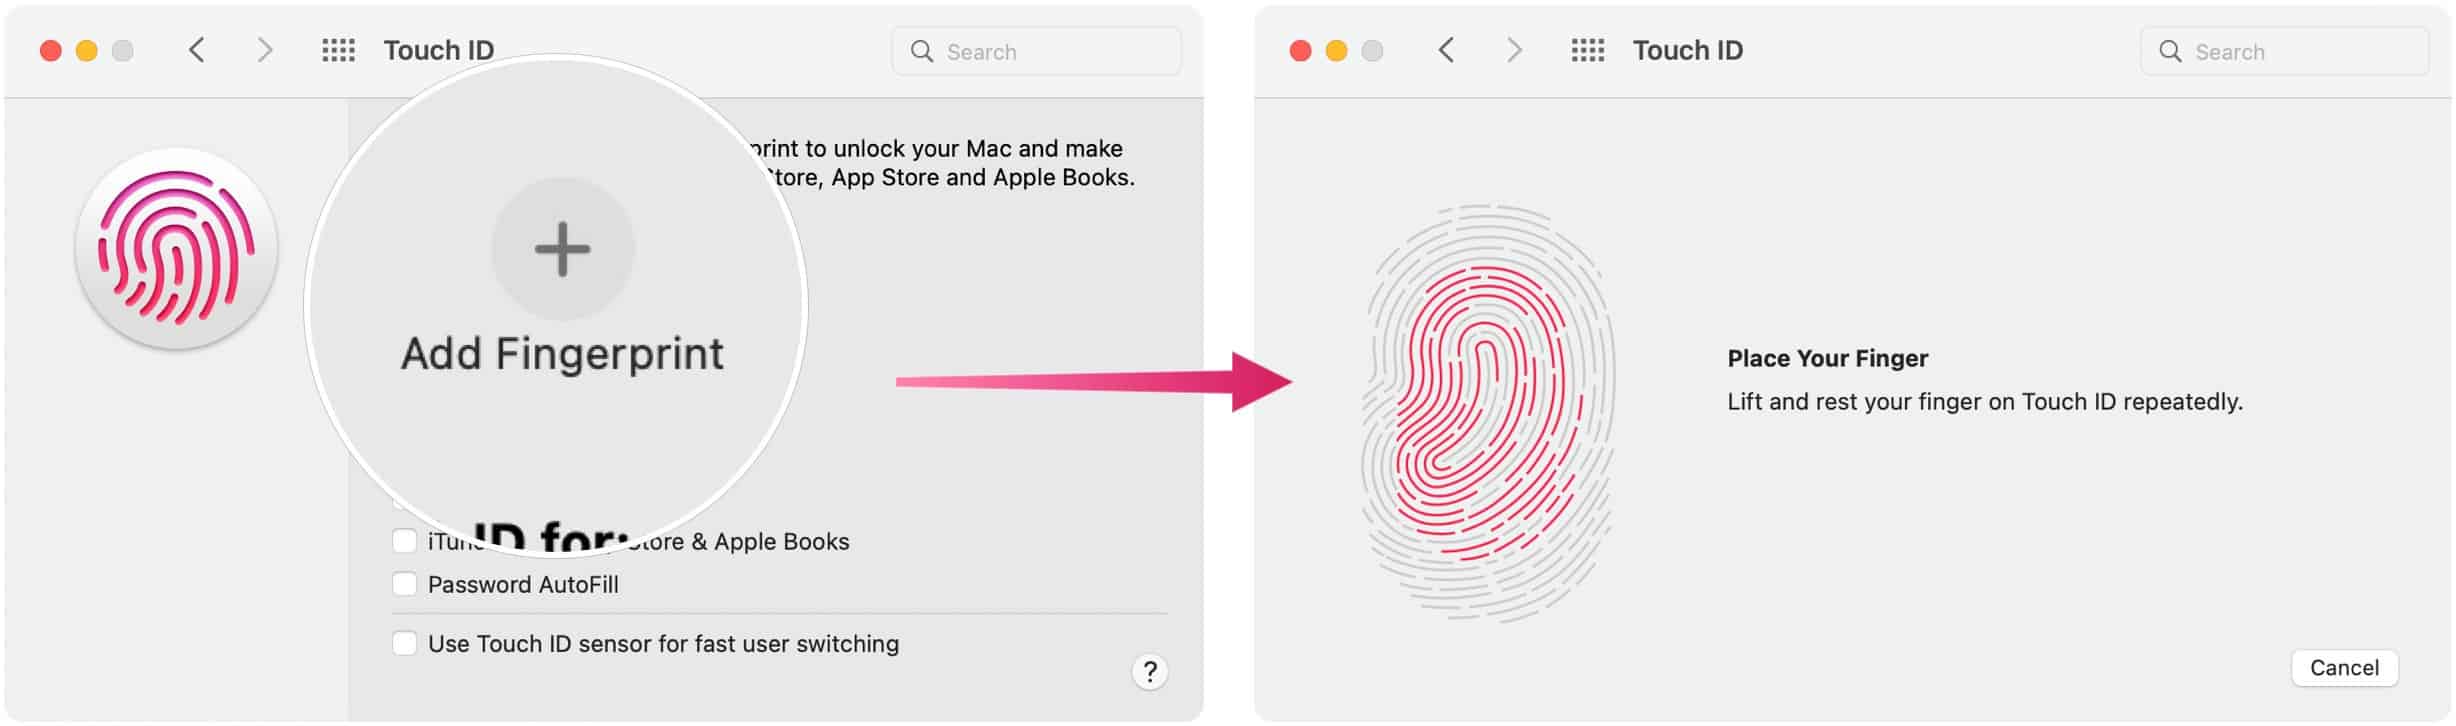 Проблемы с Touch ID: добавьте отпечаток пальца